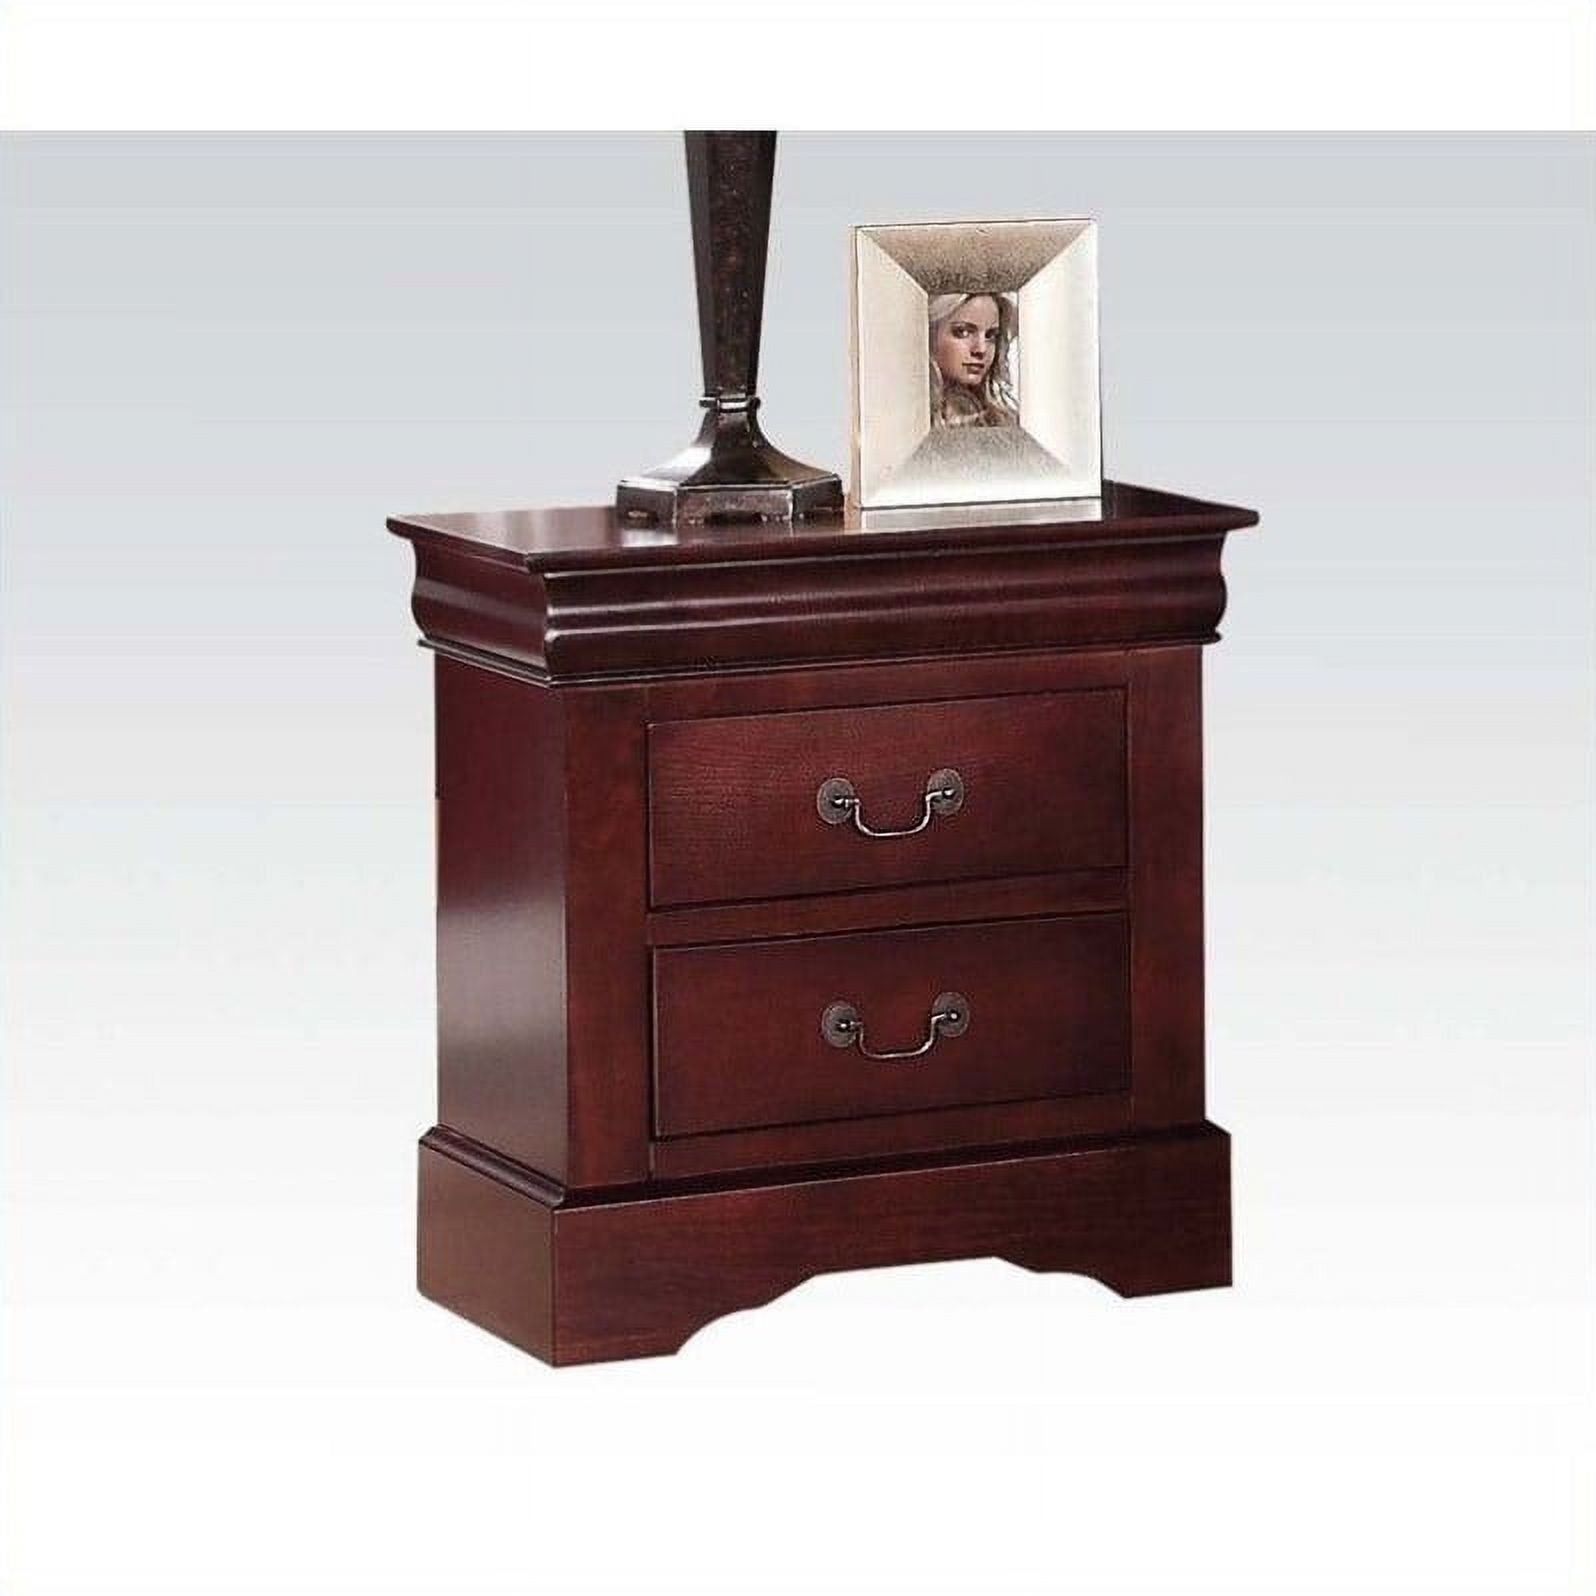 ACME Furniture Louis Philippe III Wood Nightstand in Cherry - image 1 of 3